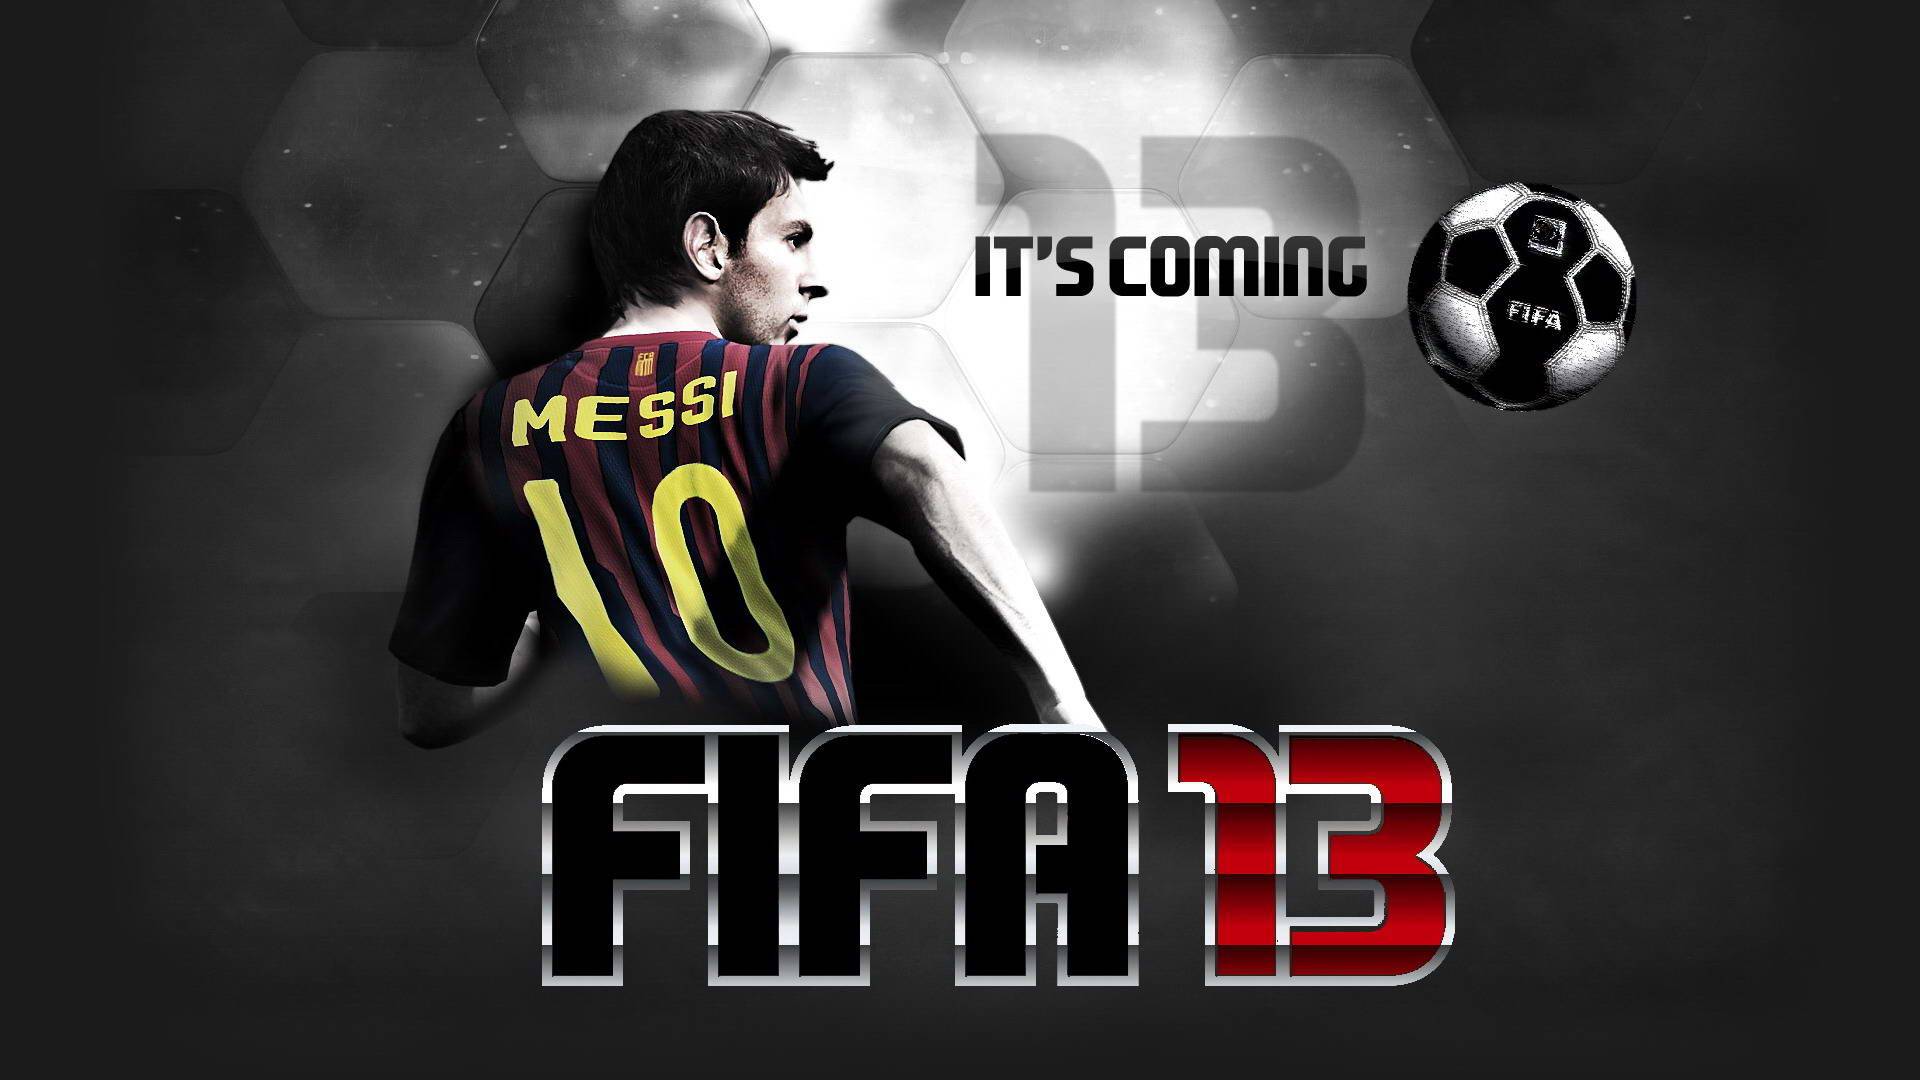 FIFA 13 Wallpaper in HD « GamingBolt.com: Video Game News